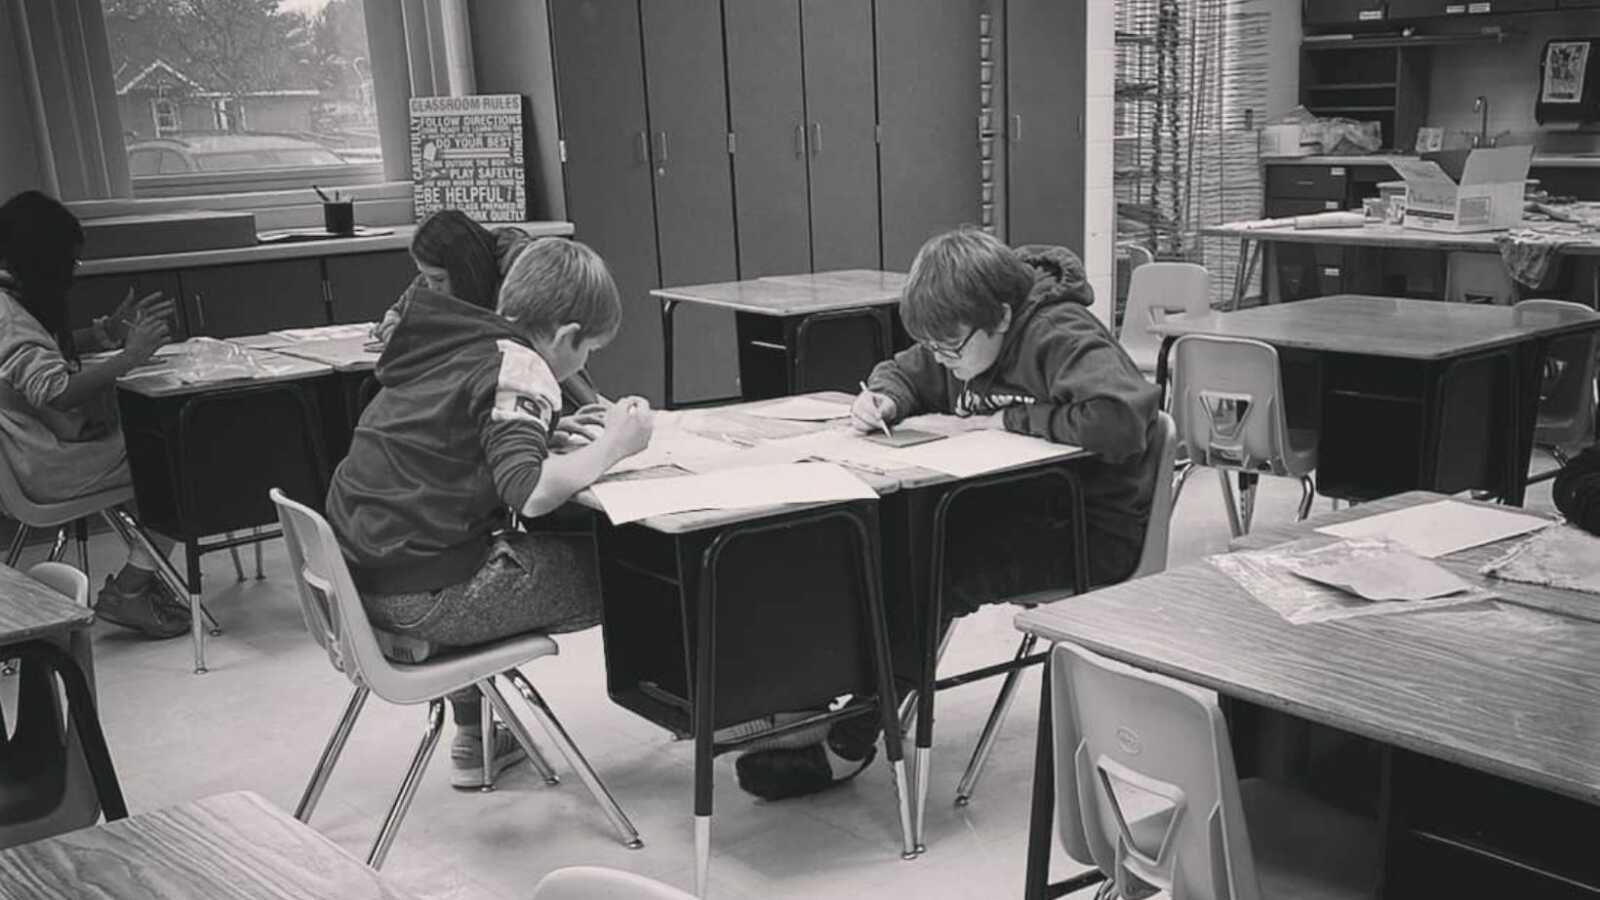 kids sitting at desks working on their school activities